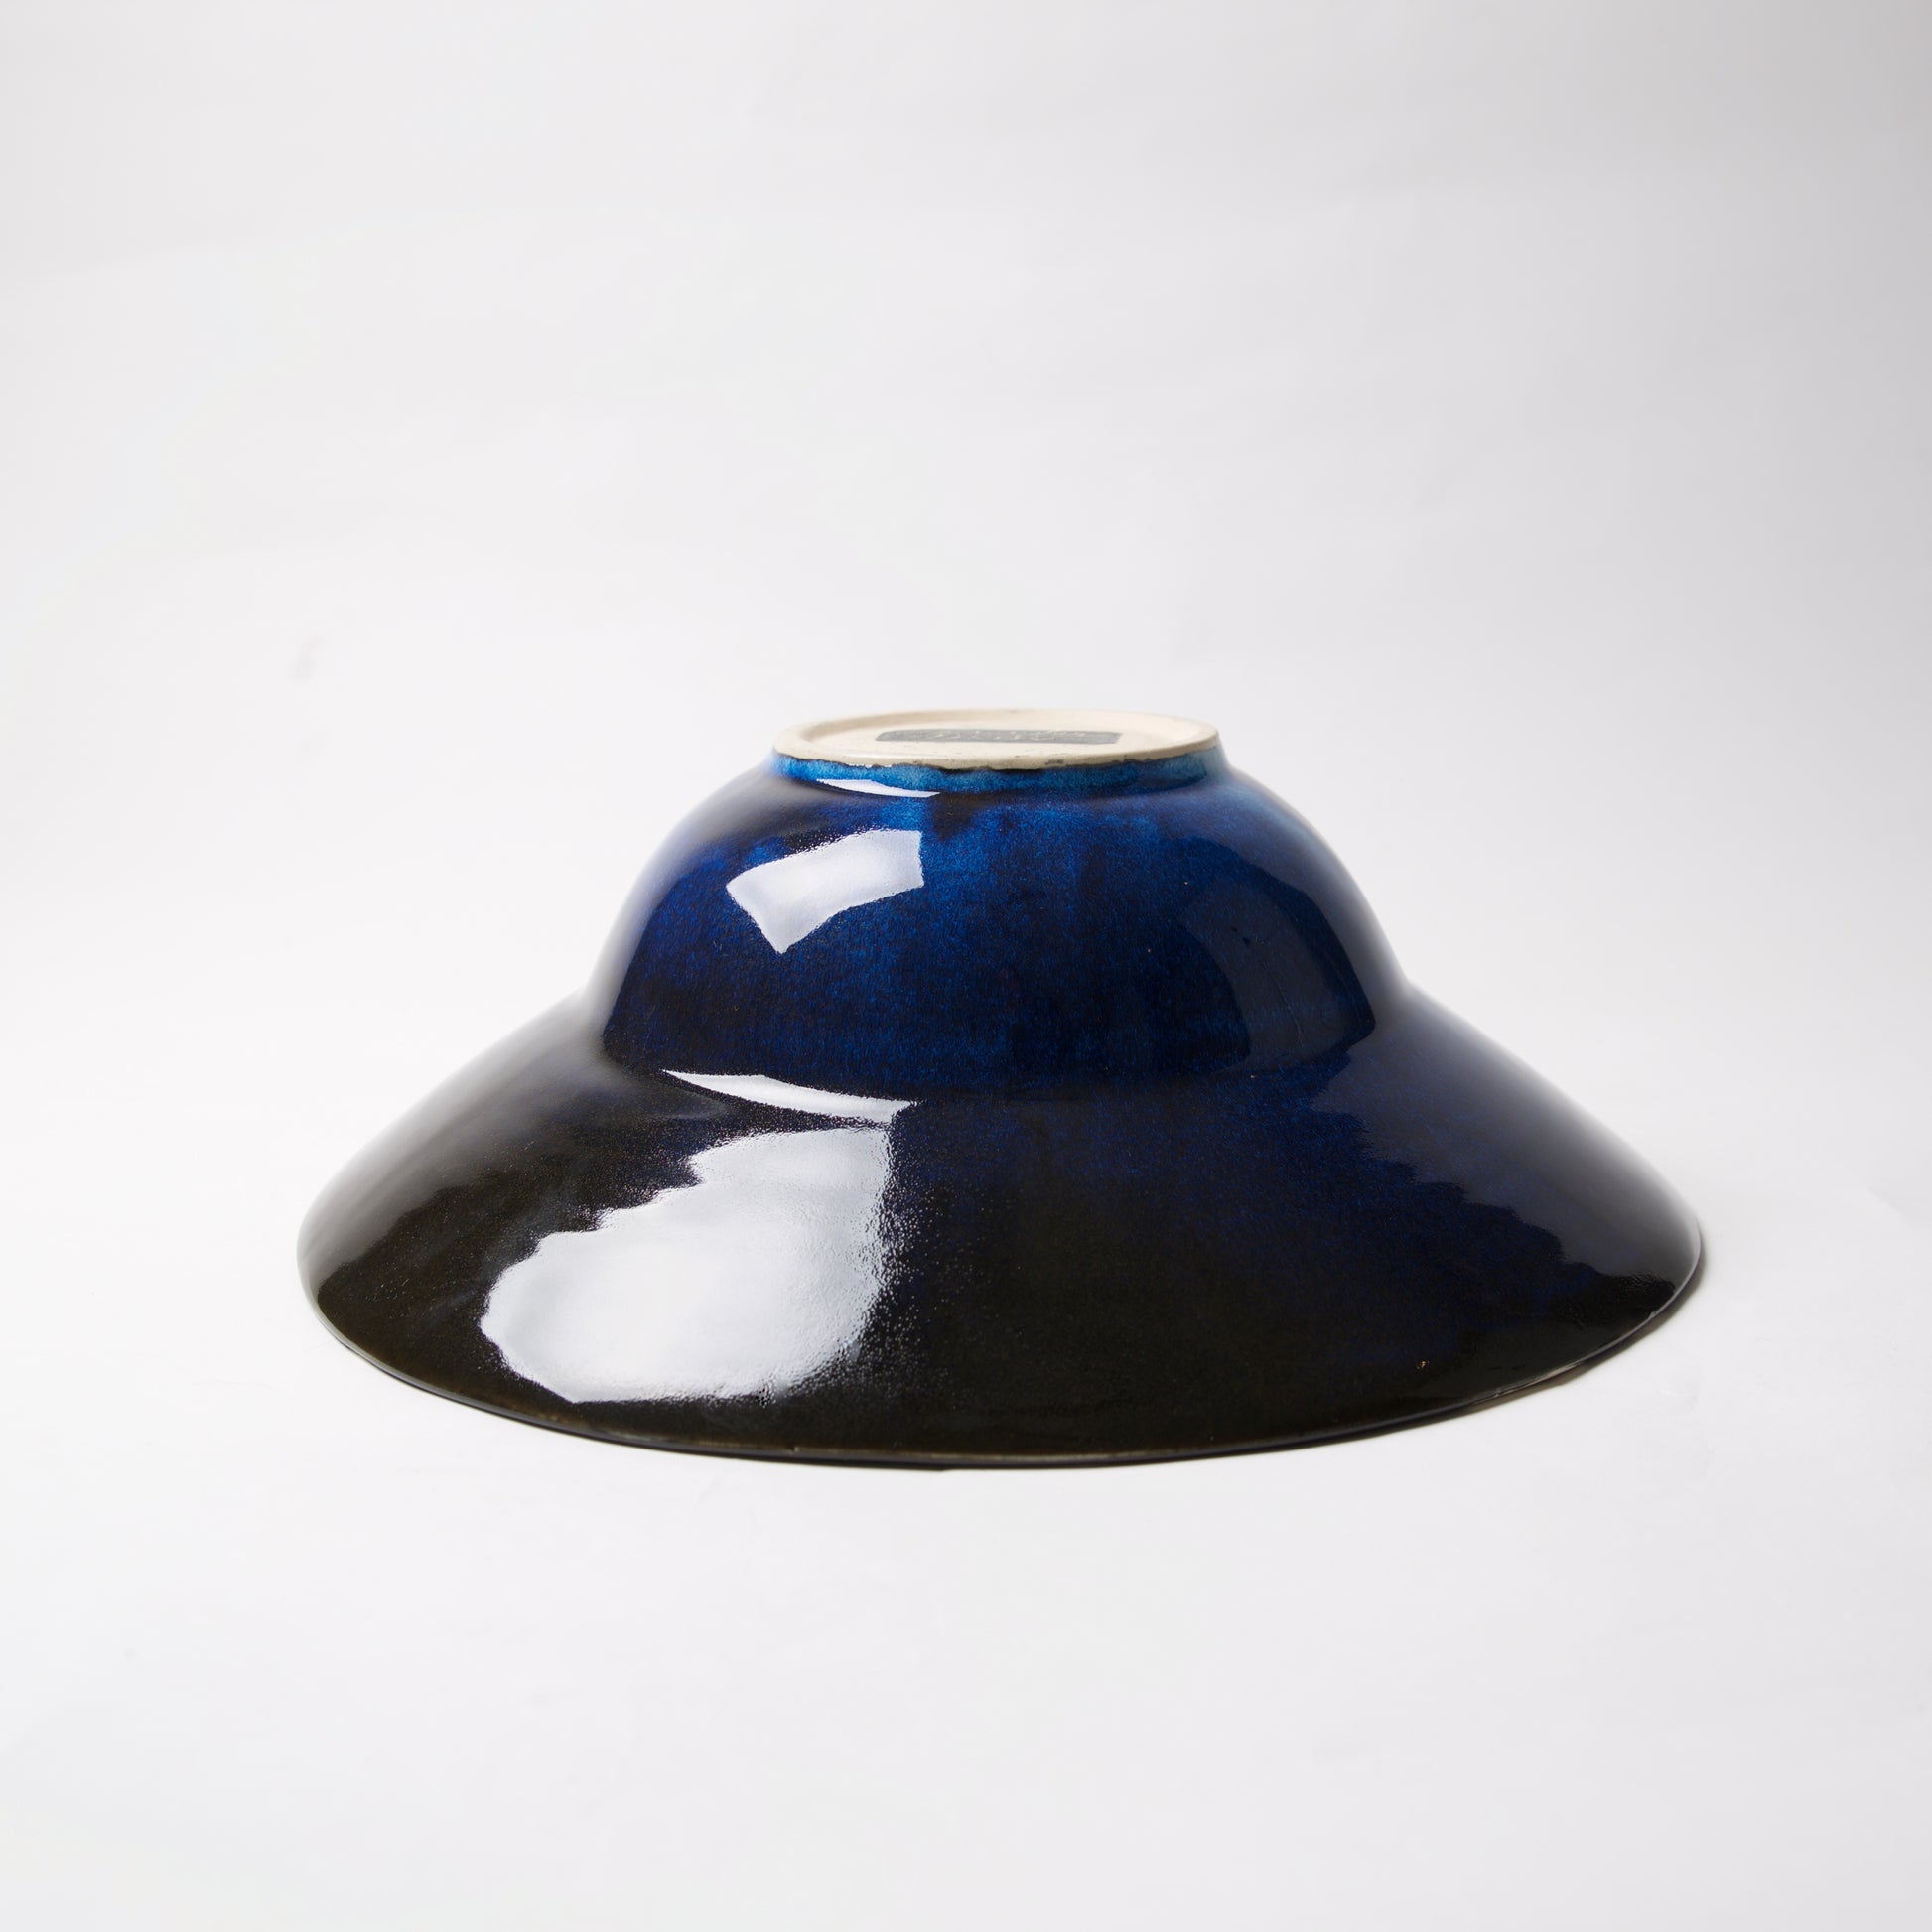 Cobalt Swirly Large Wide Bowl by Liz Kinder - © Blue Pomegranate Gallery